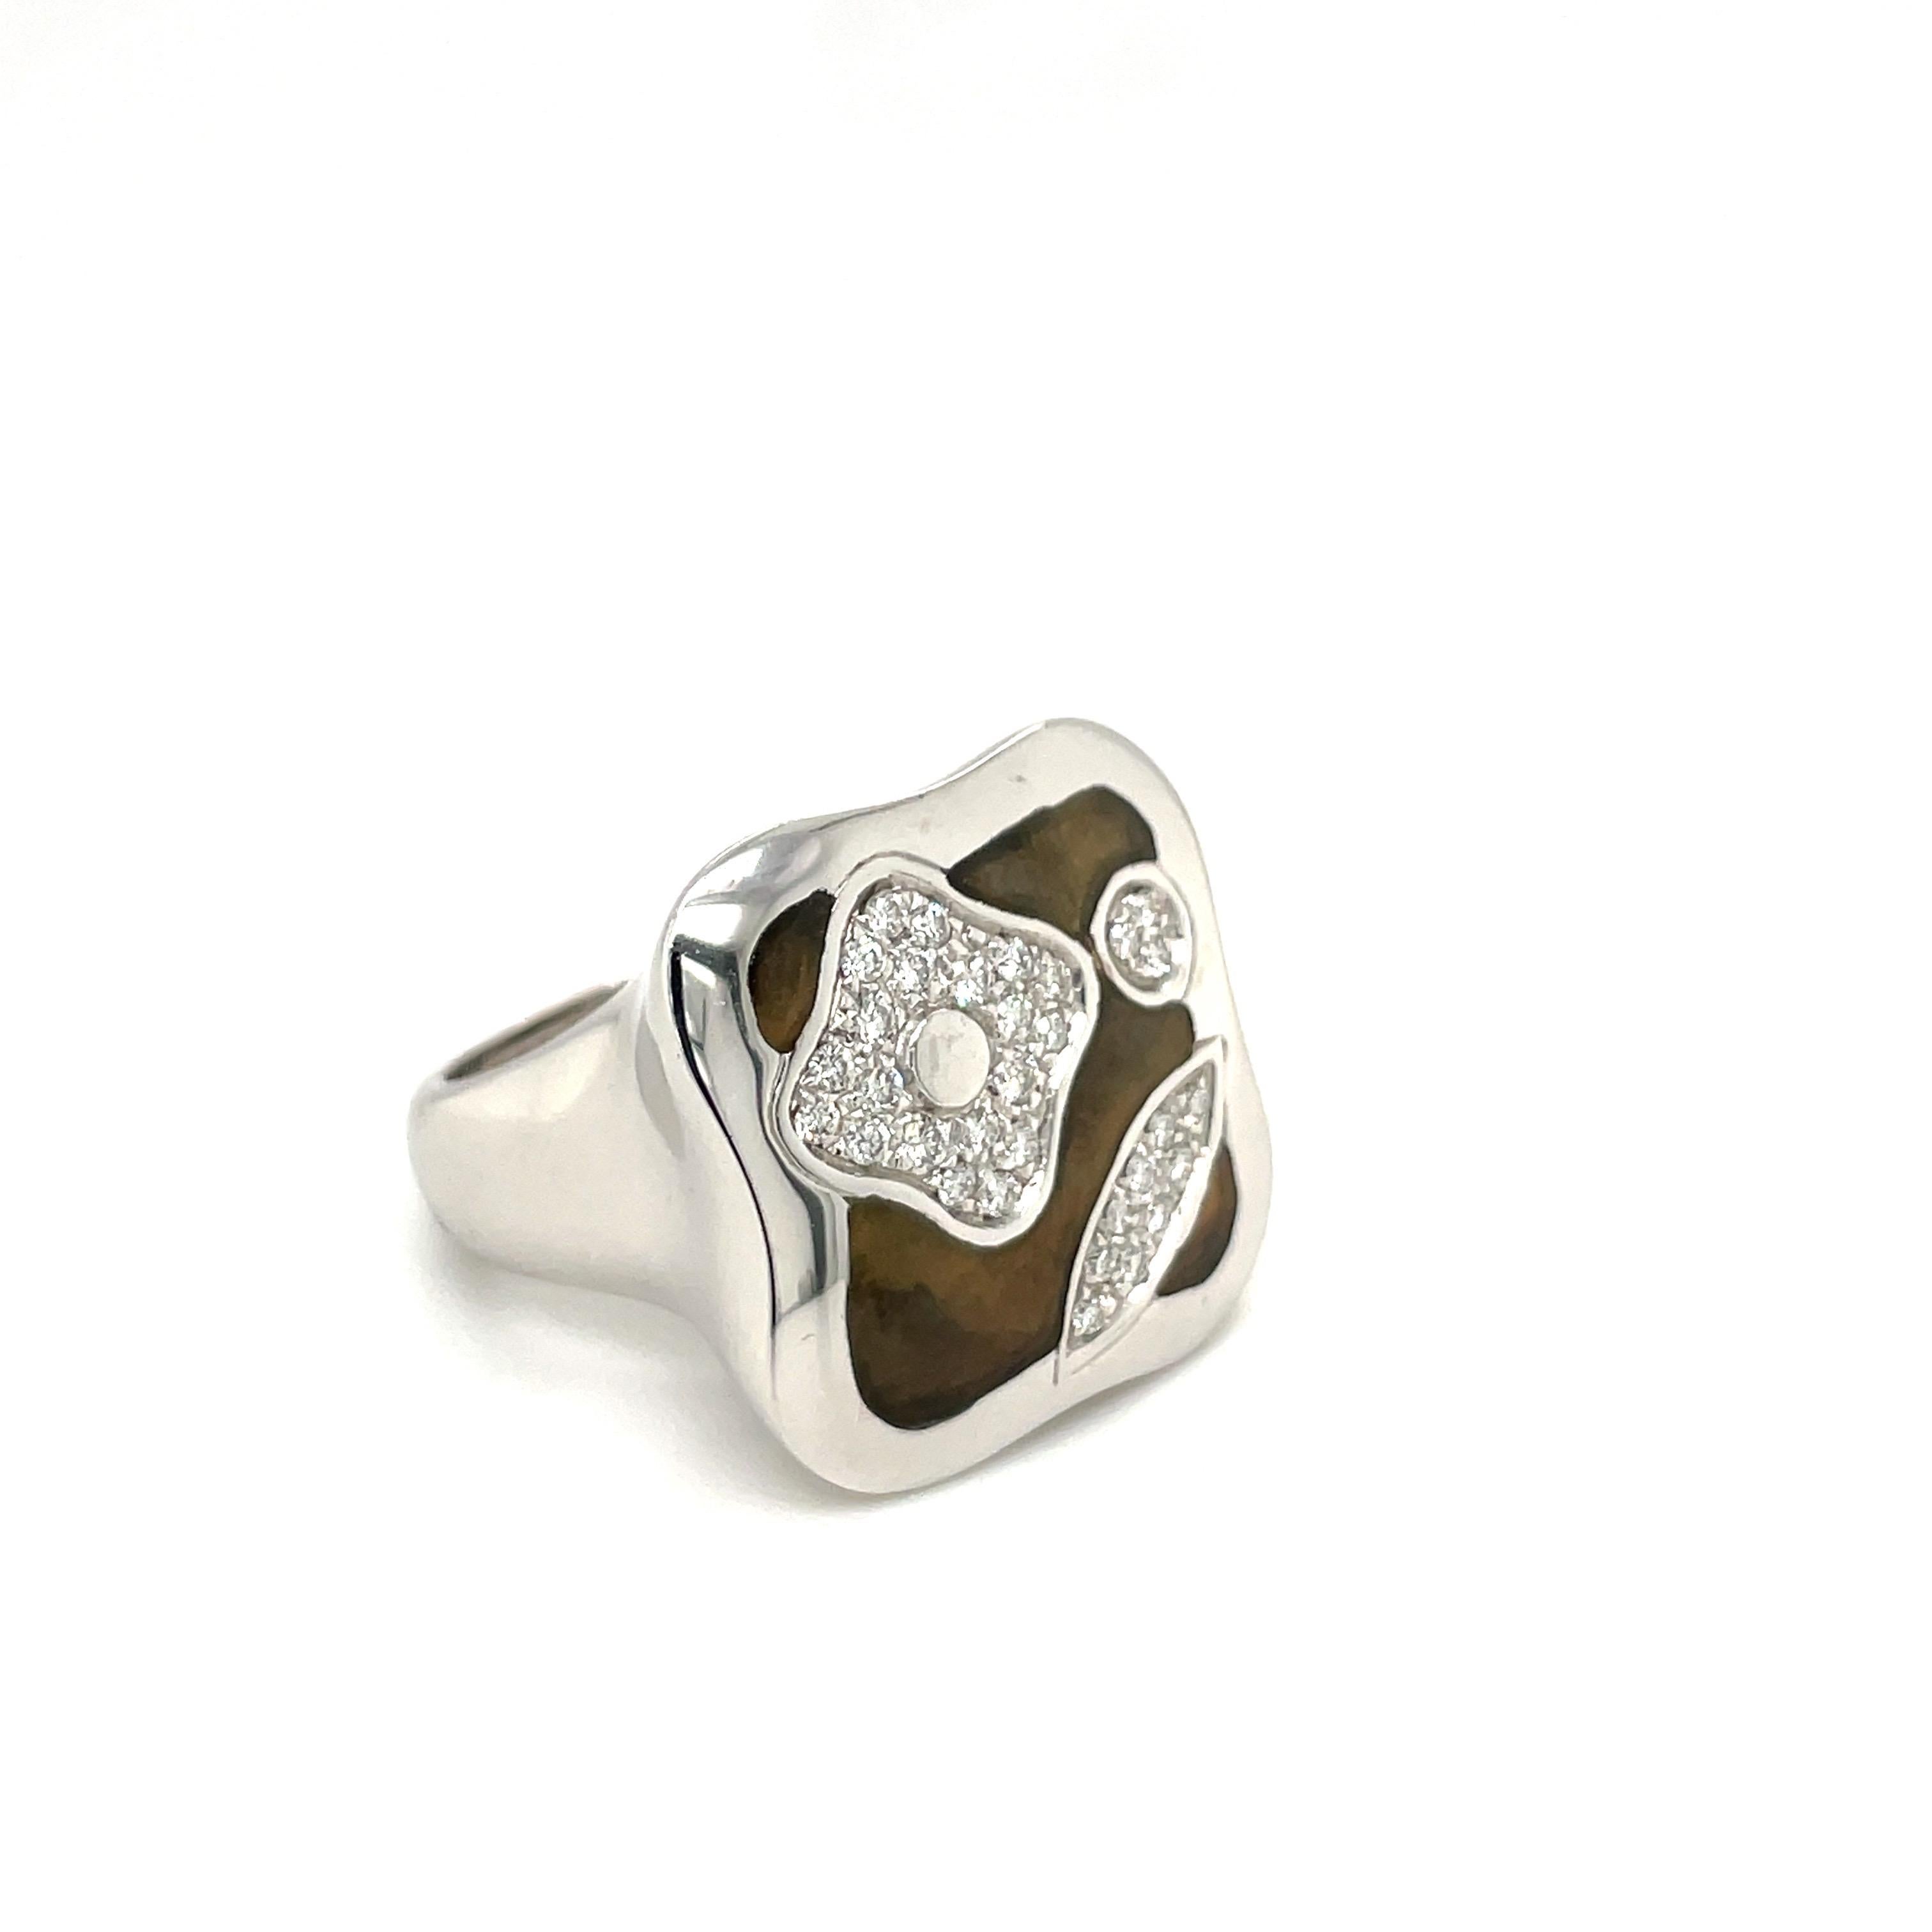 La Nouvelle 18kt White Gold Fiori Ring .39cts Diamond & Enamel For Sale 2